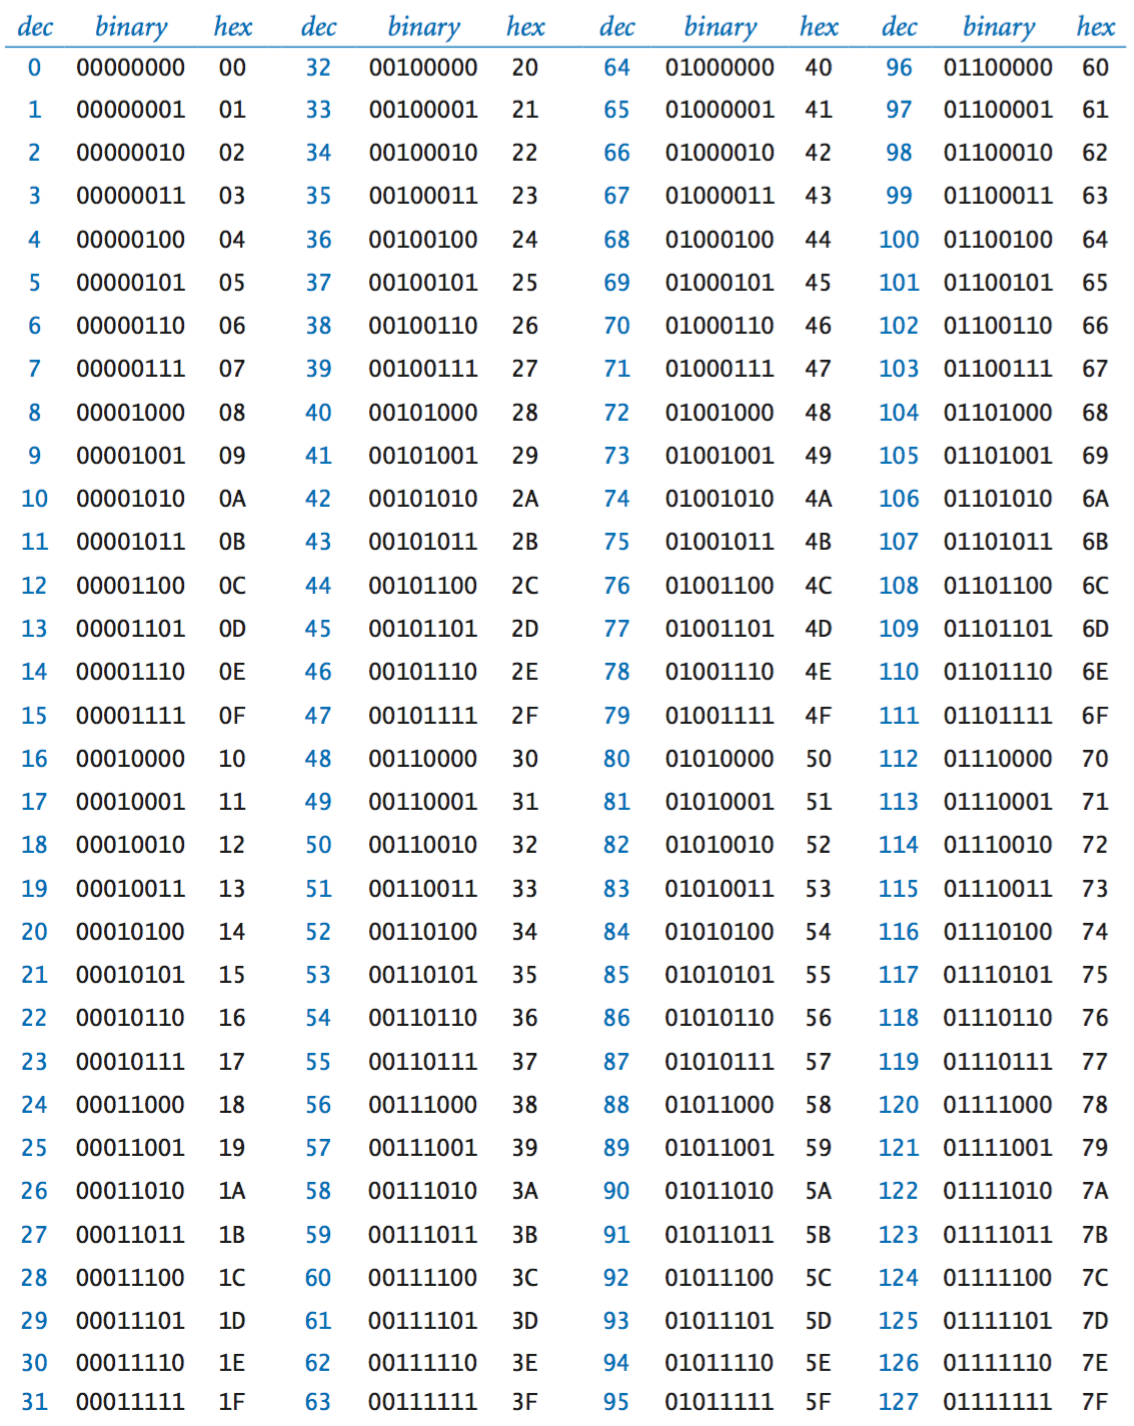 binary, decimal, and hex 00-7F